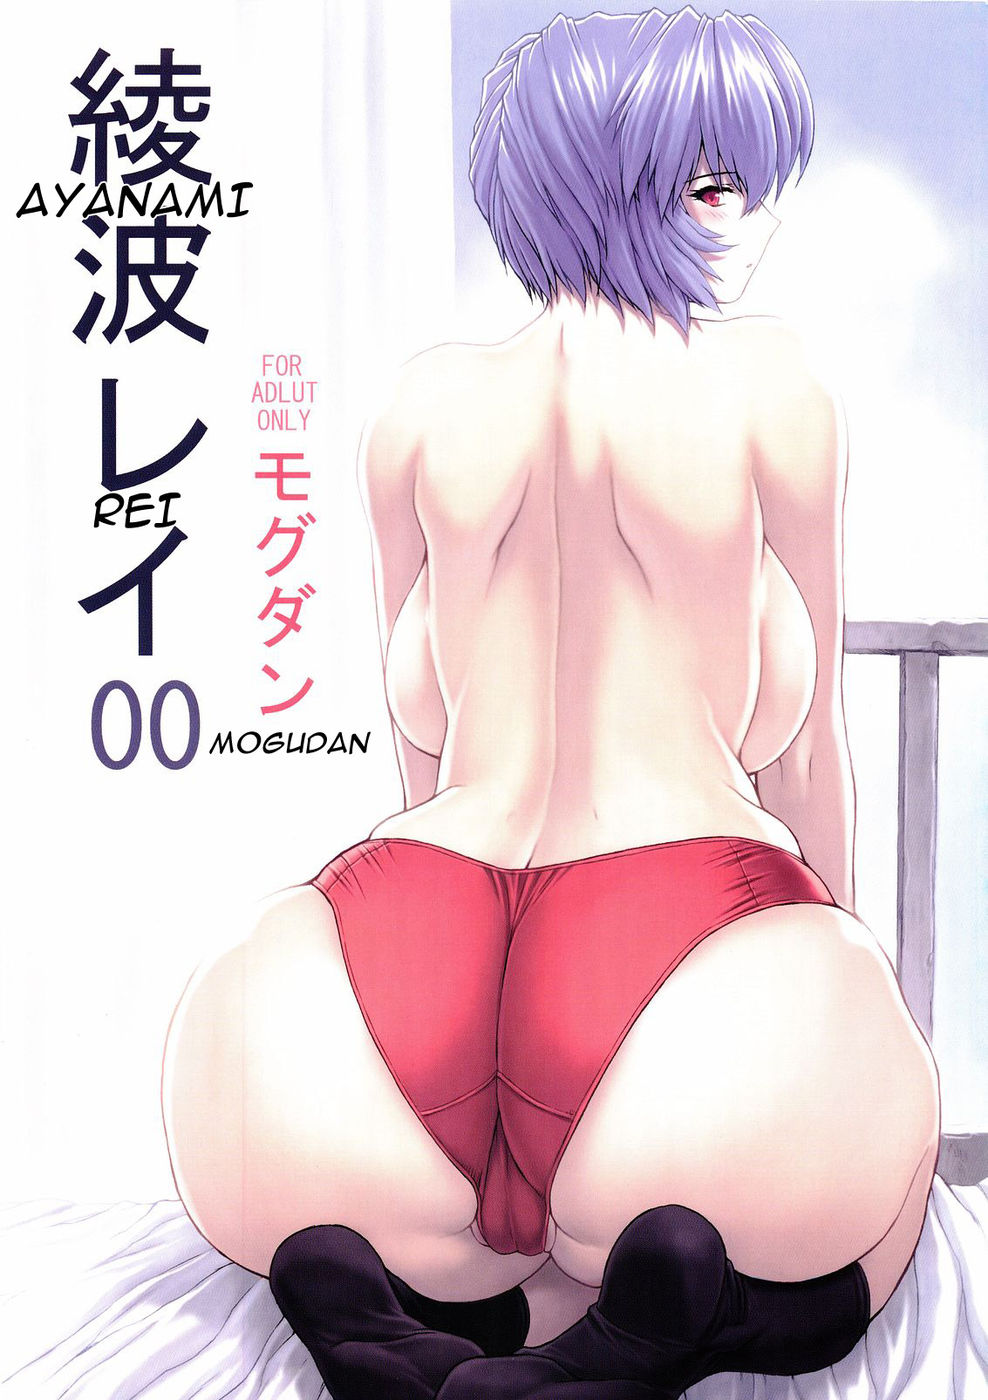 Hentai Manga Comic-Ayanami Rei 00-Read-1